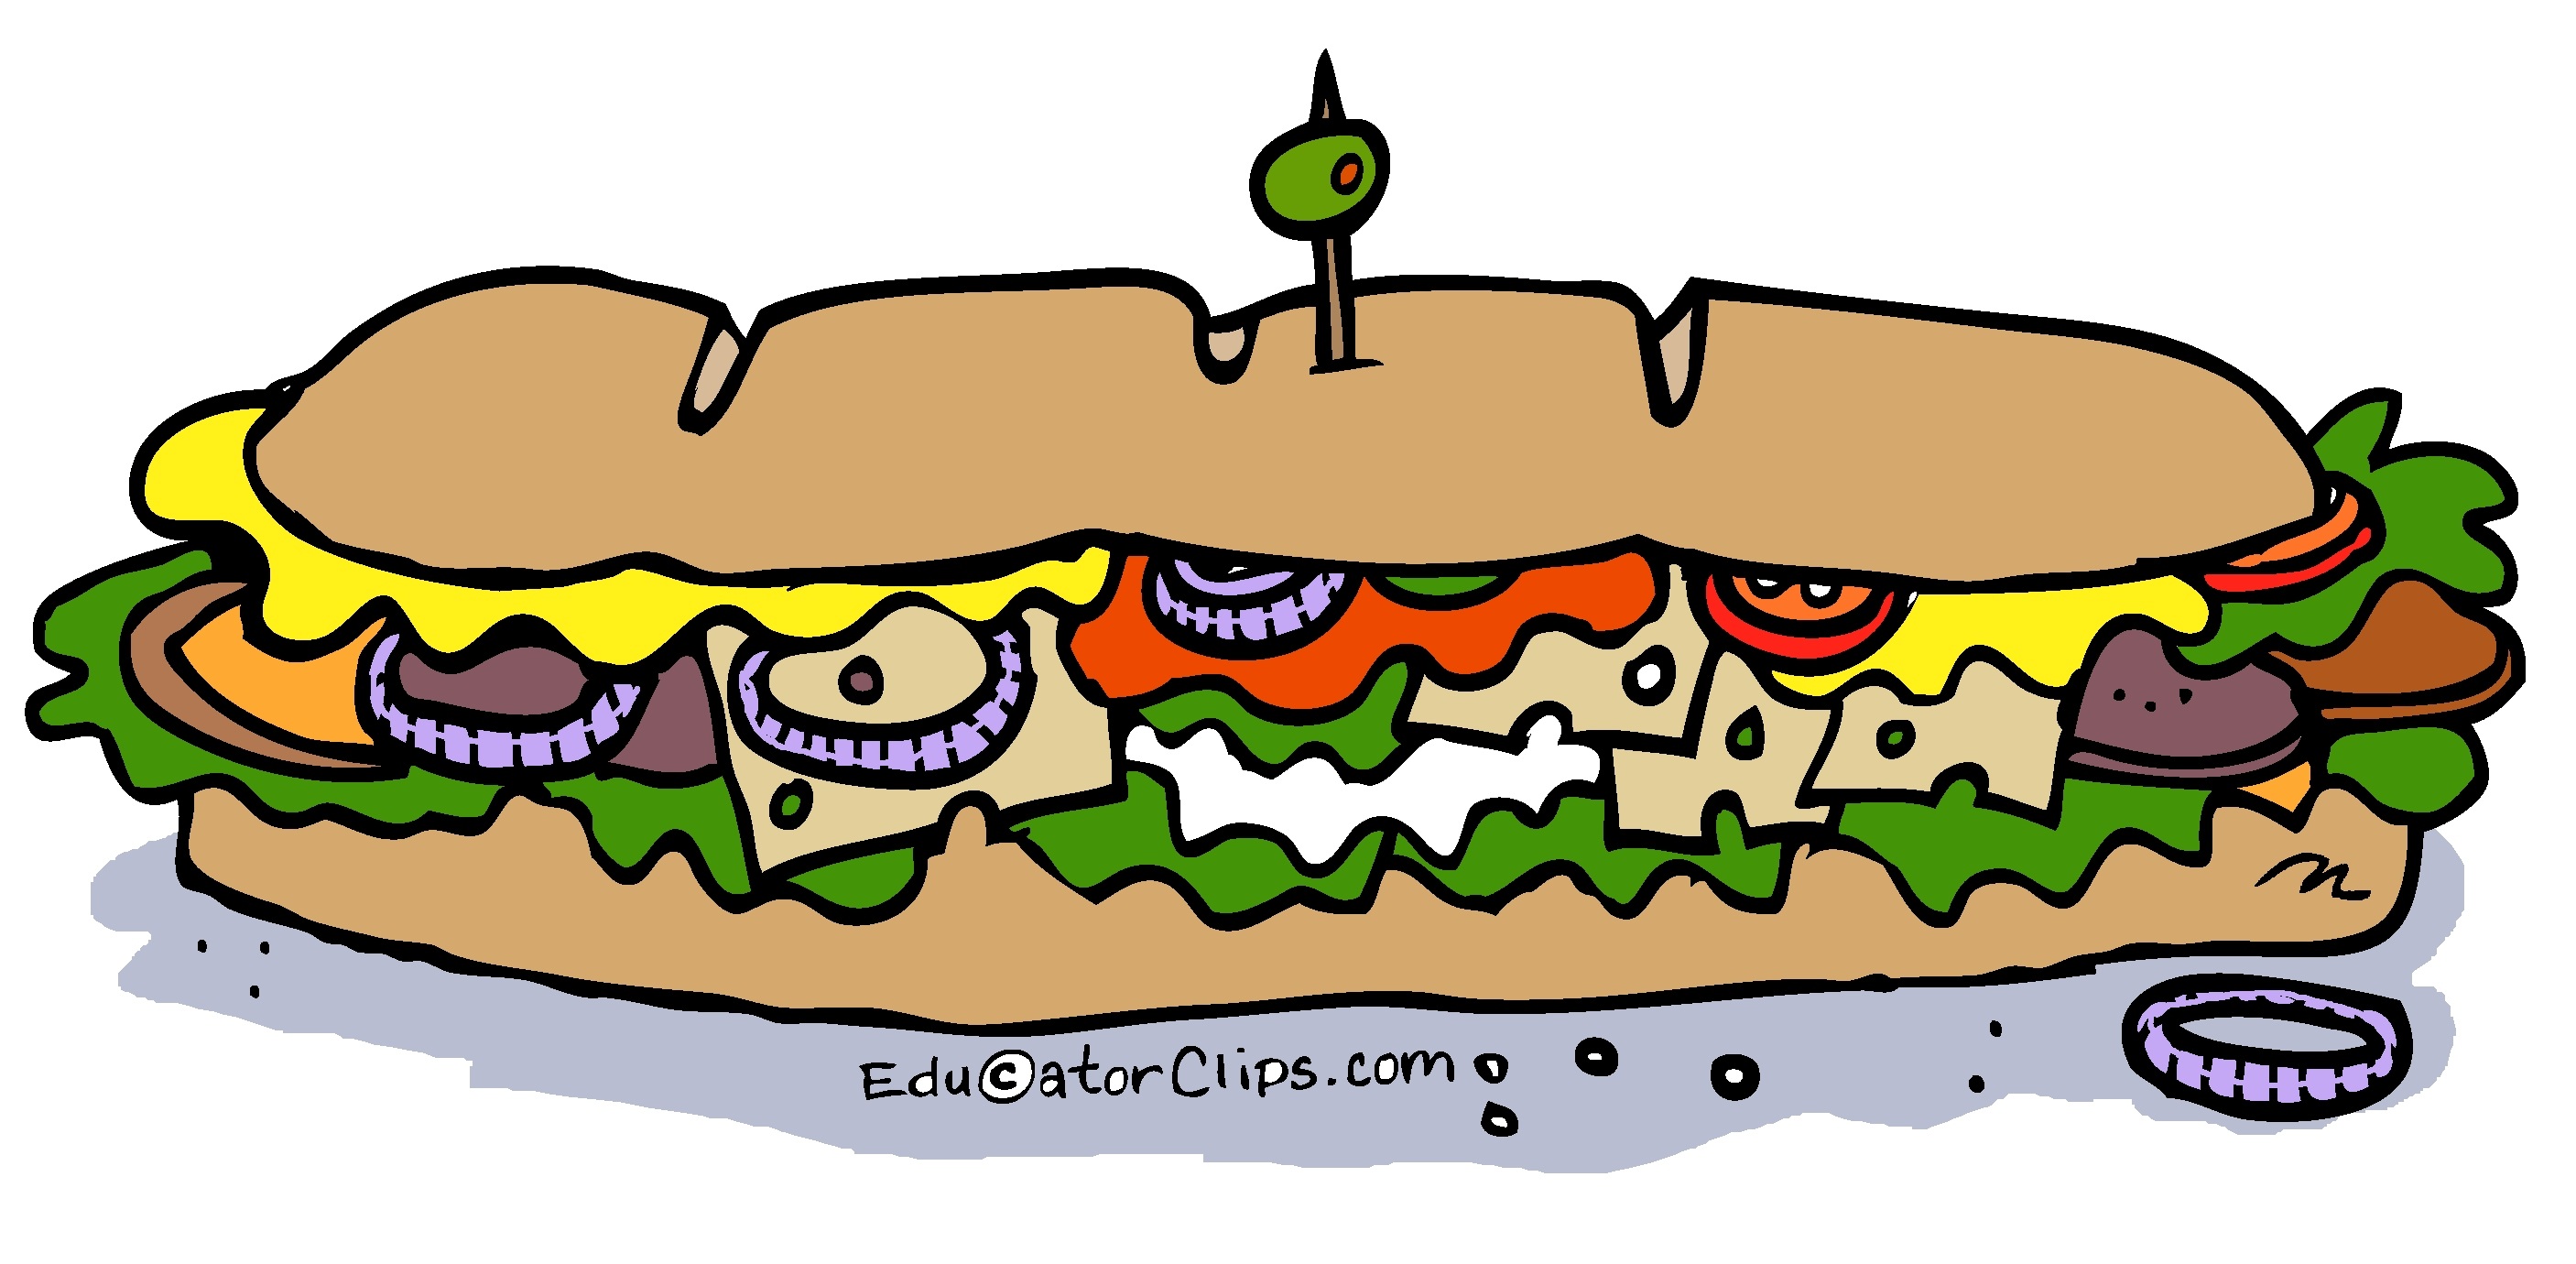 hoagie sandwich clip art